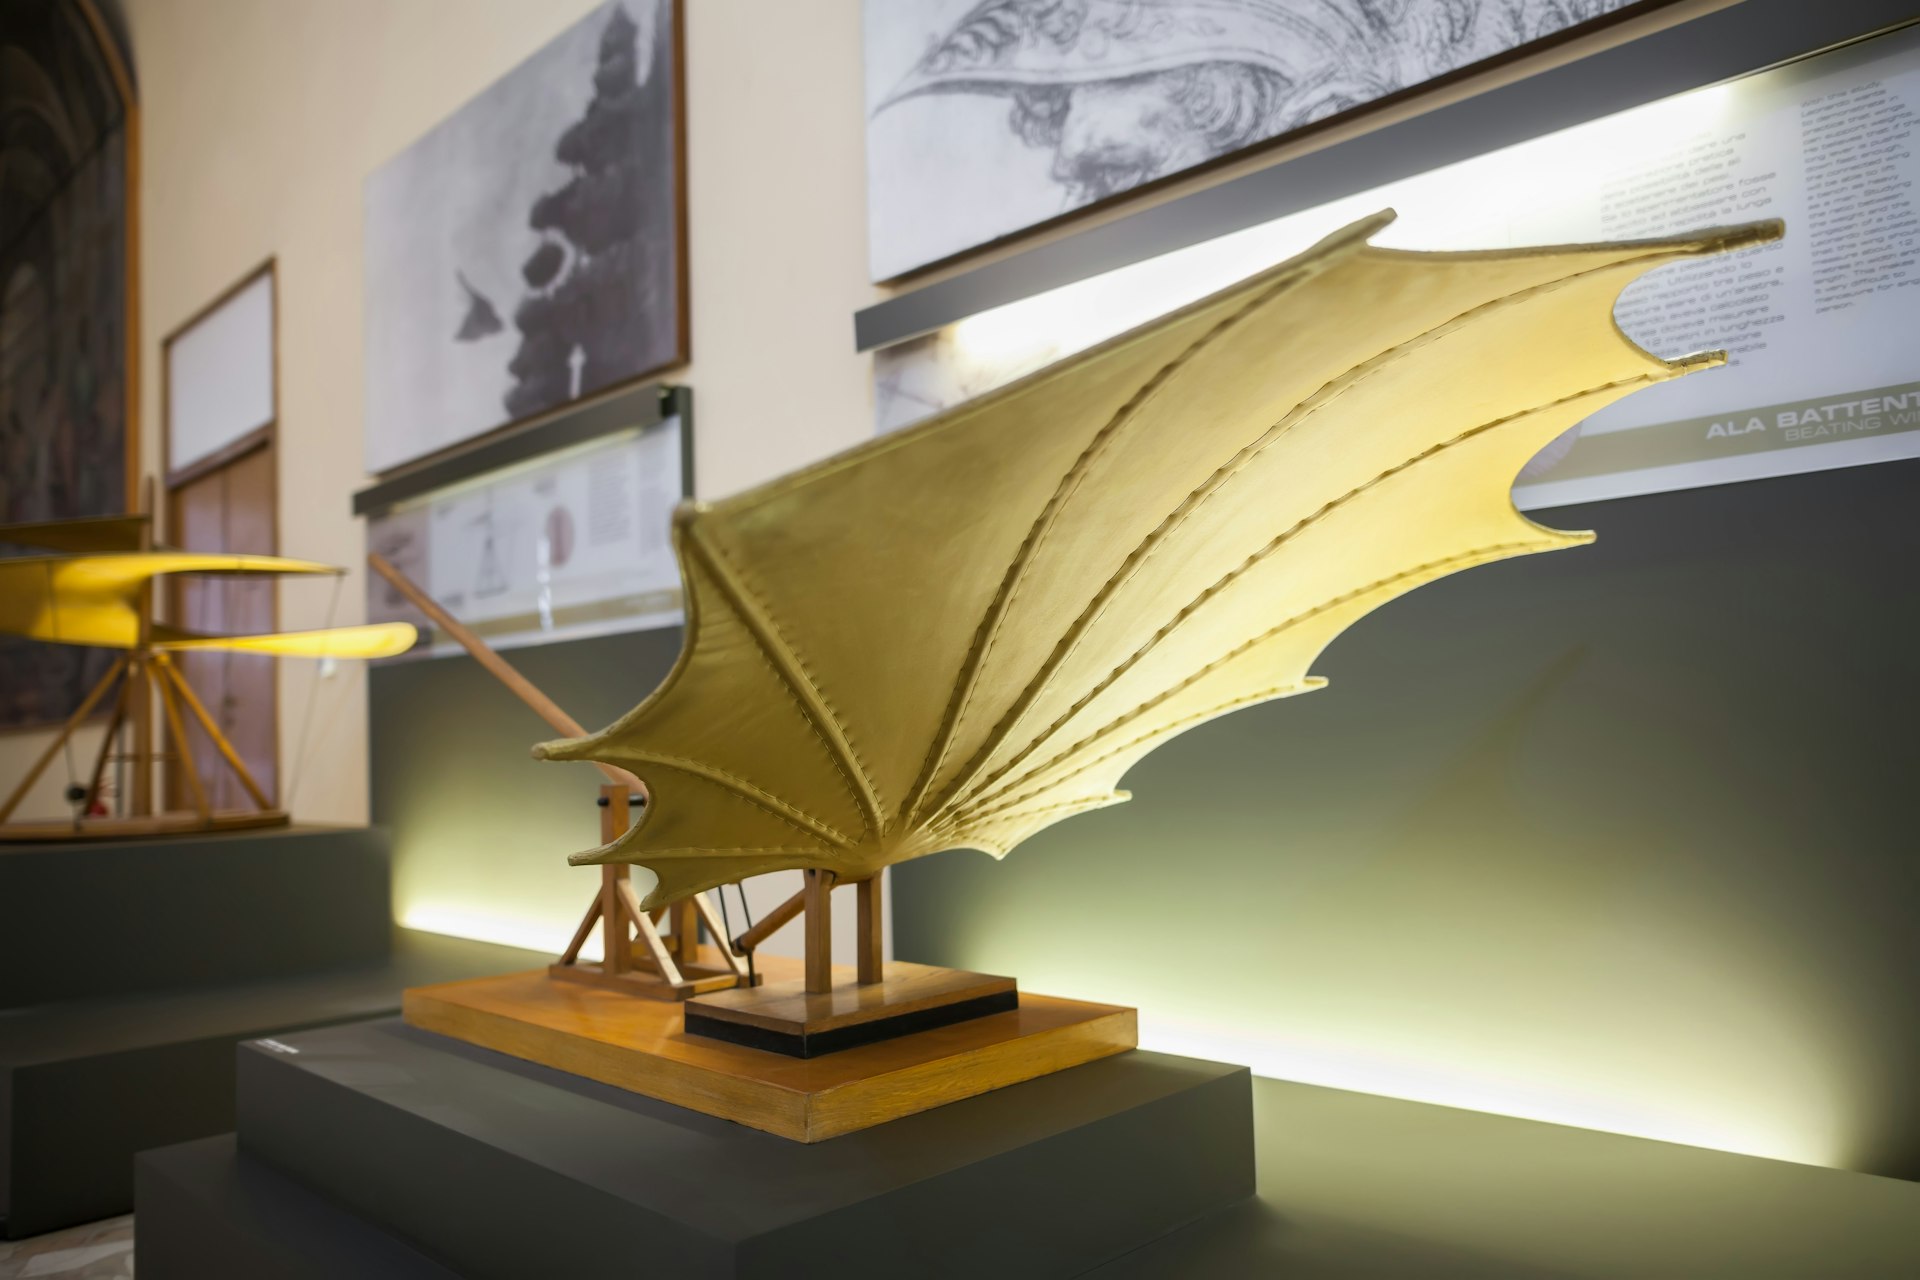 Beating wings models of Leonardo da Vinci's scientific studies displayed at the Science and Technology Museum Leonardo da Vinci